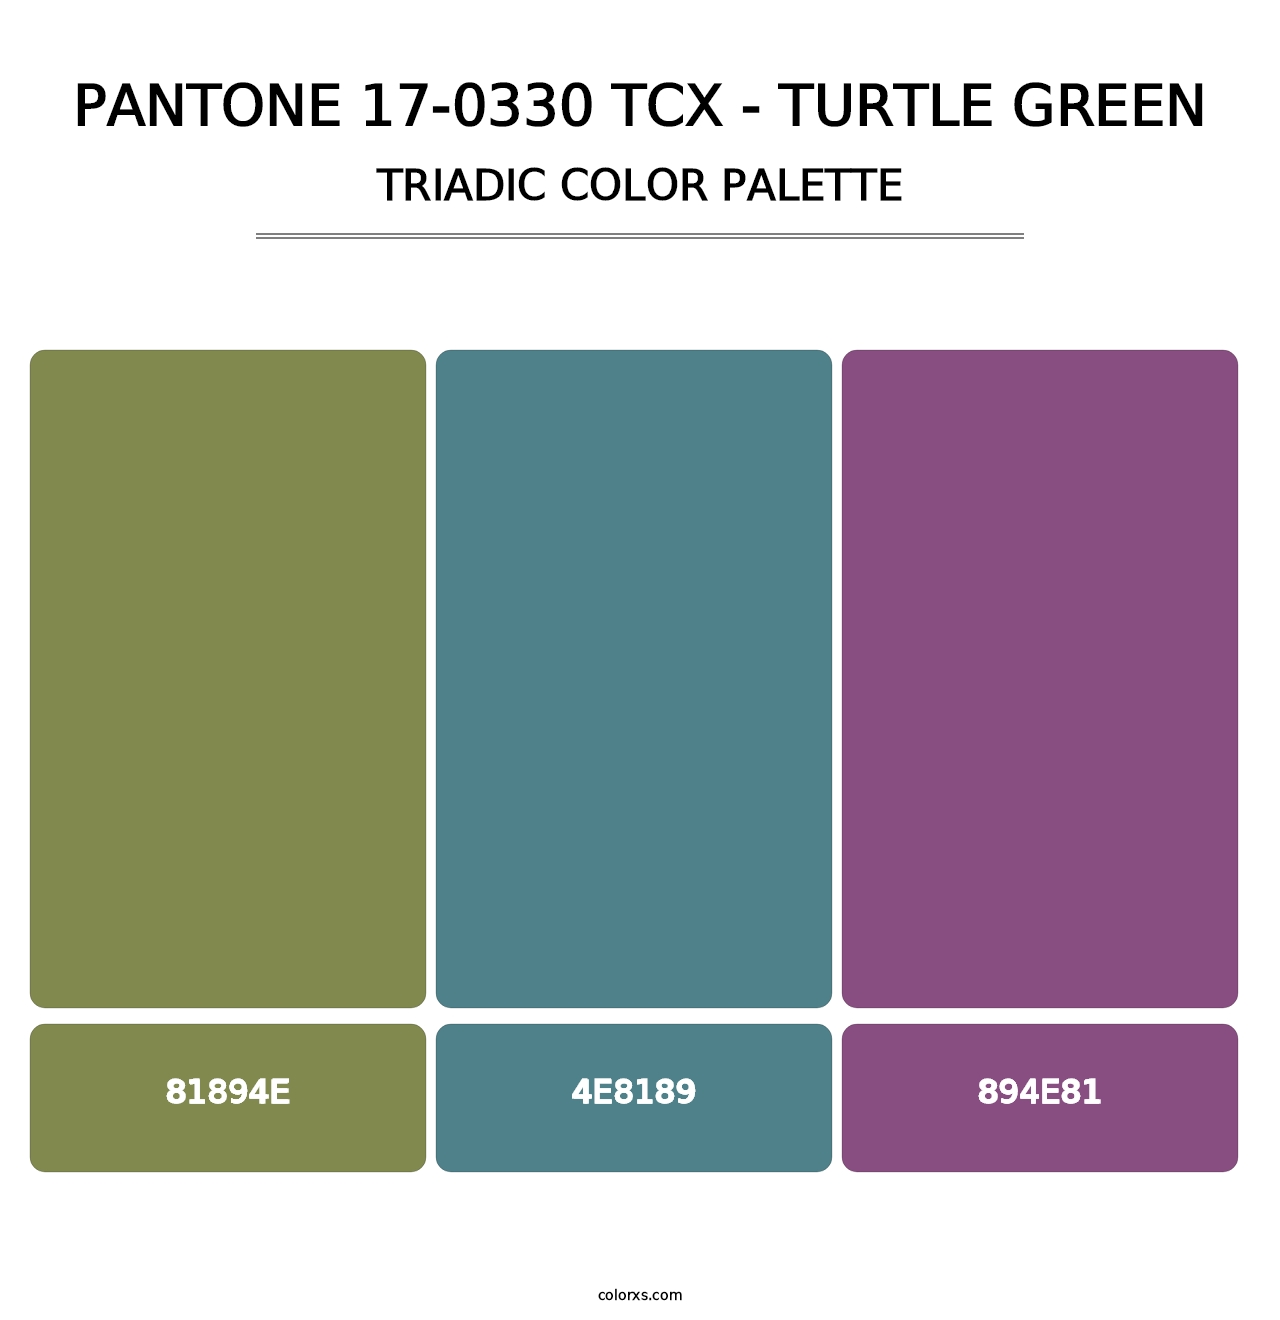 PANTONE 17-0330 TCX - Turtle Green - Triadic Color Palette